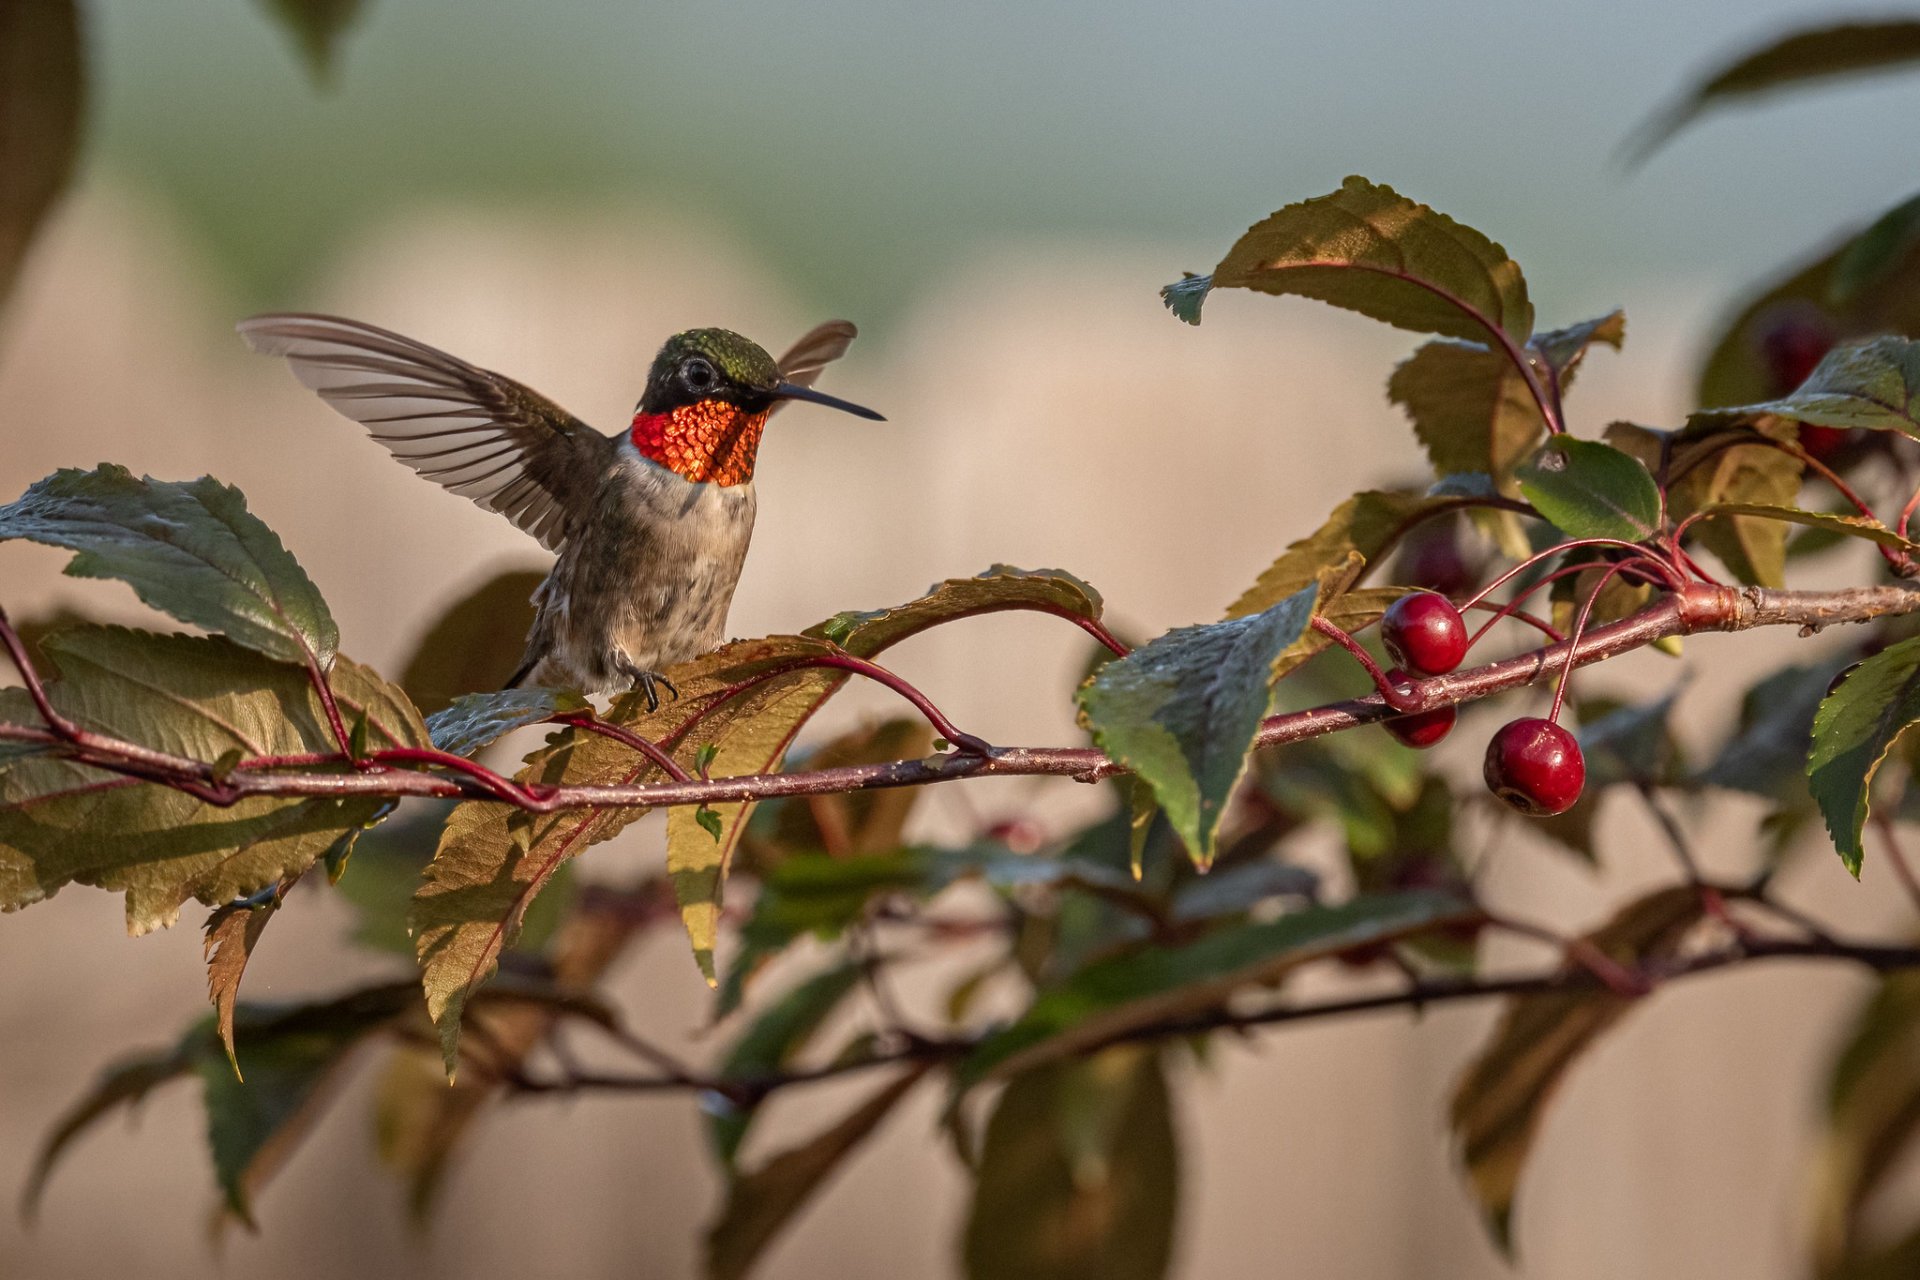 Native Plants that Attract Hummingbirds in Virginia's Capital Region